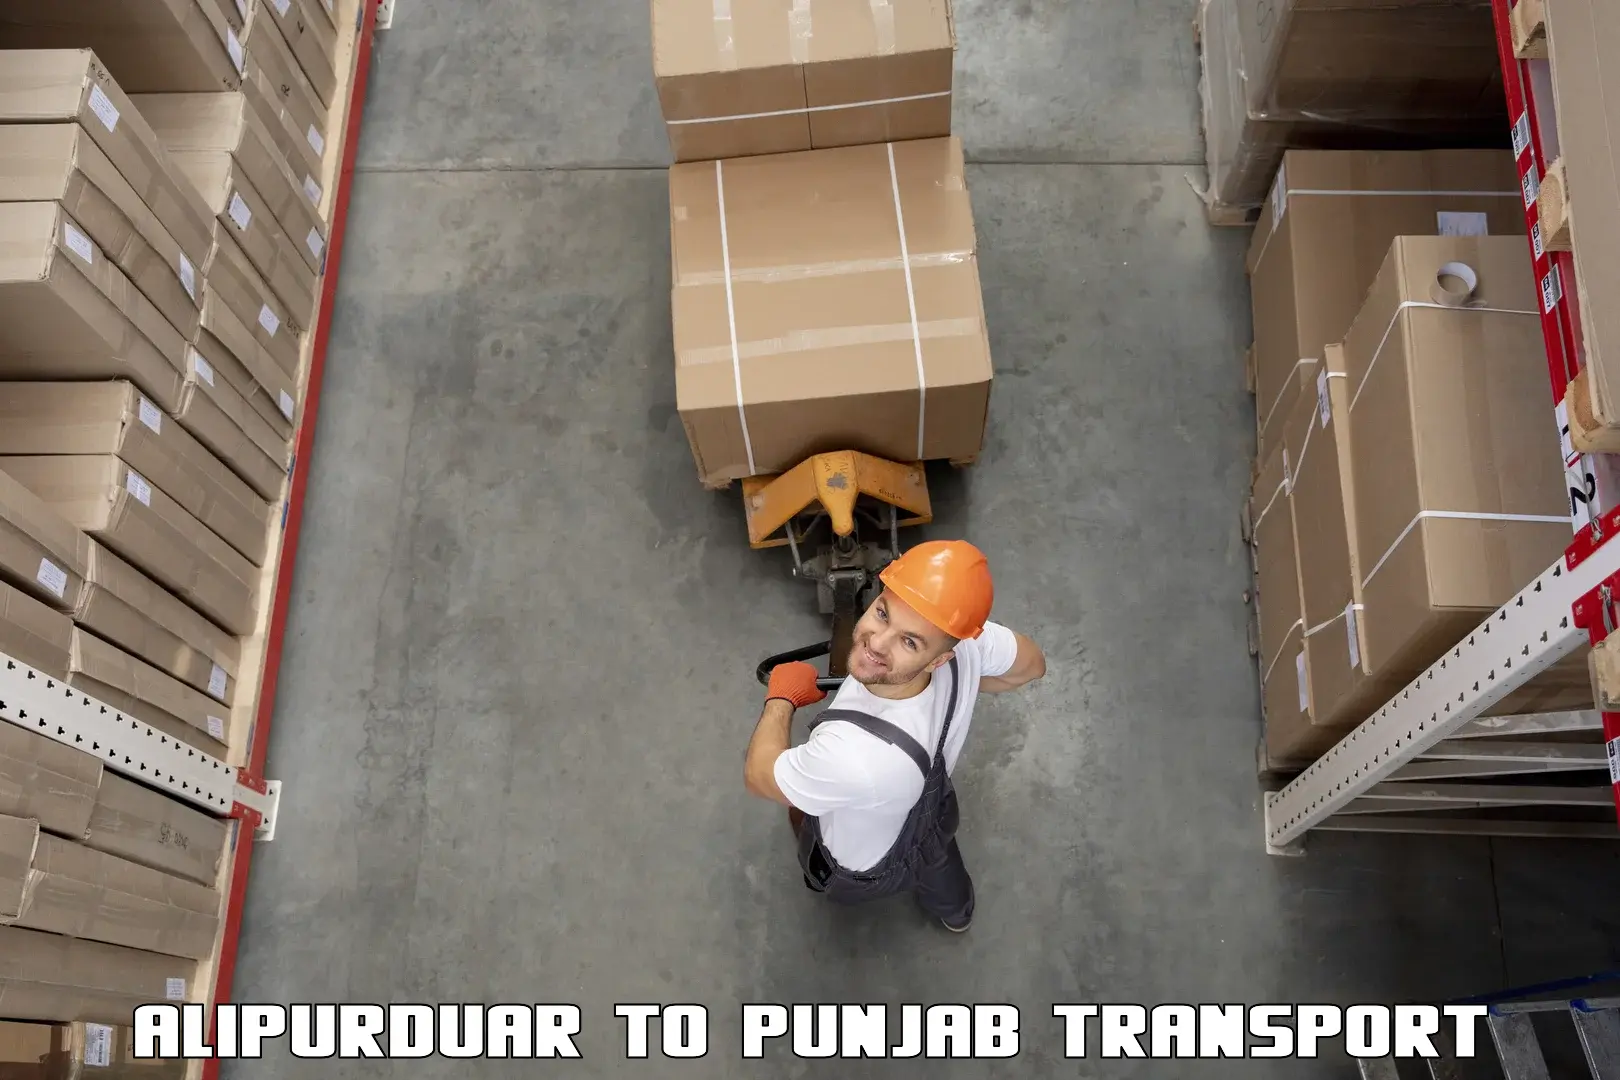 Shipping partner Alipurduar to Tarsikka